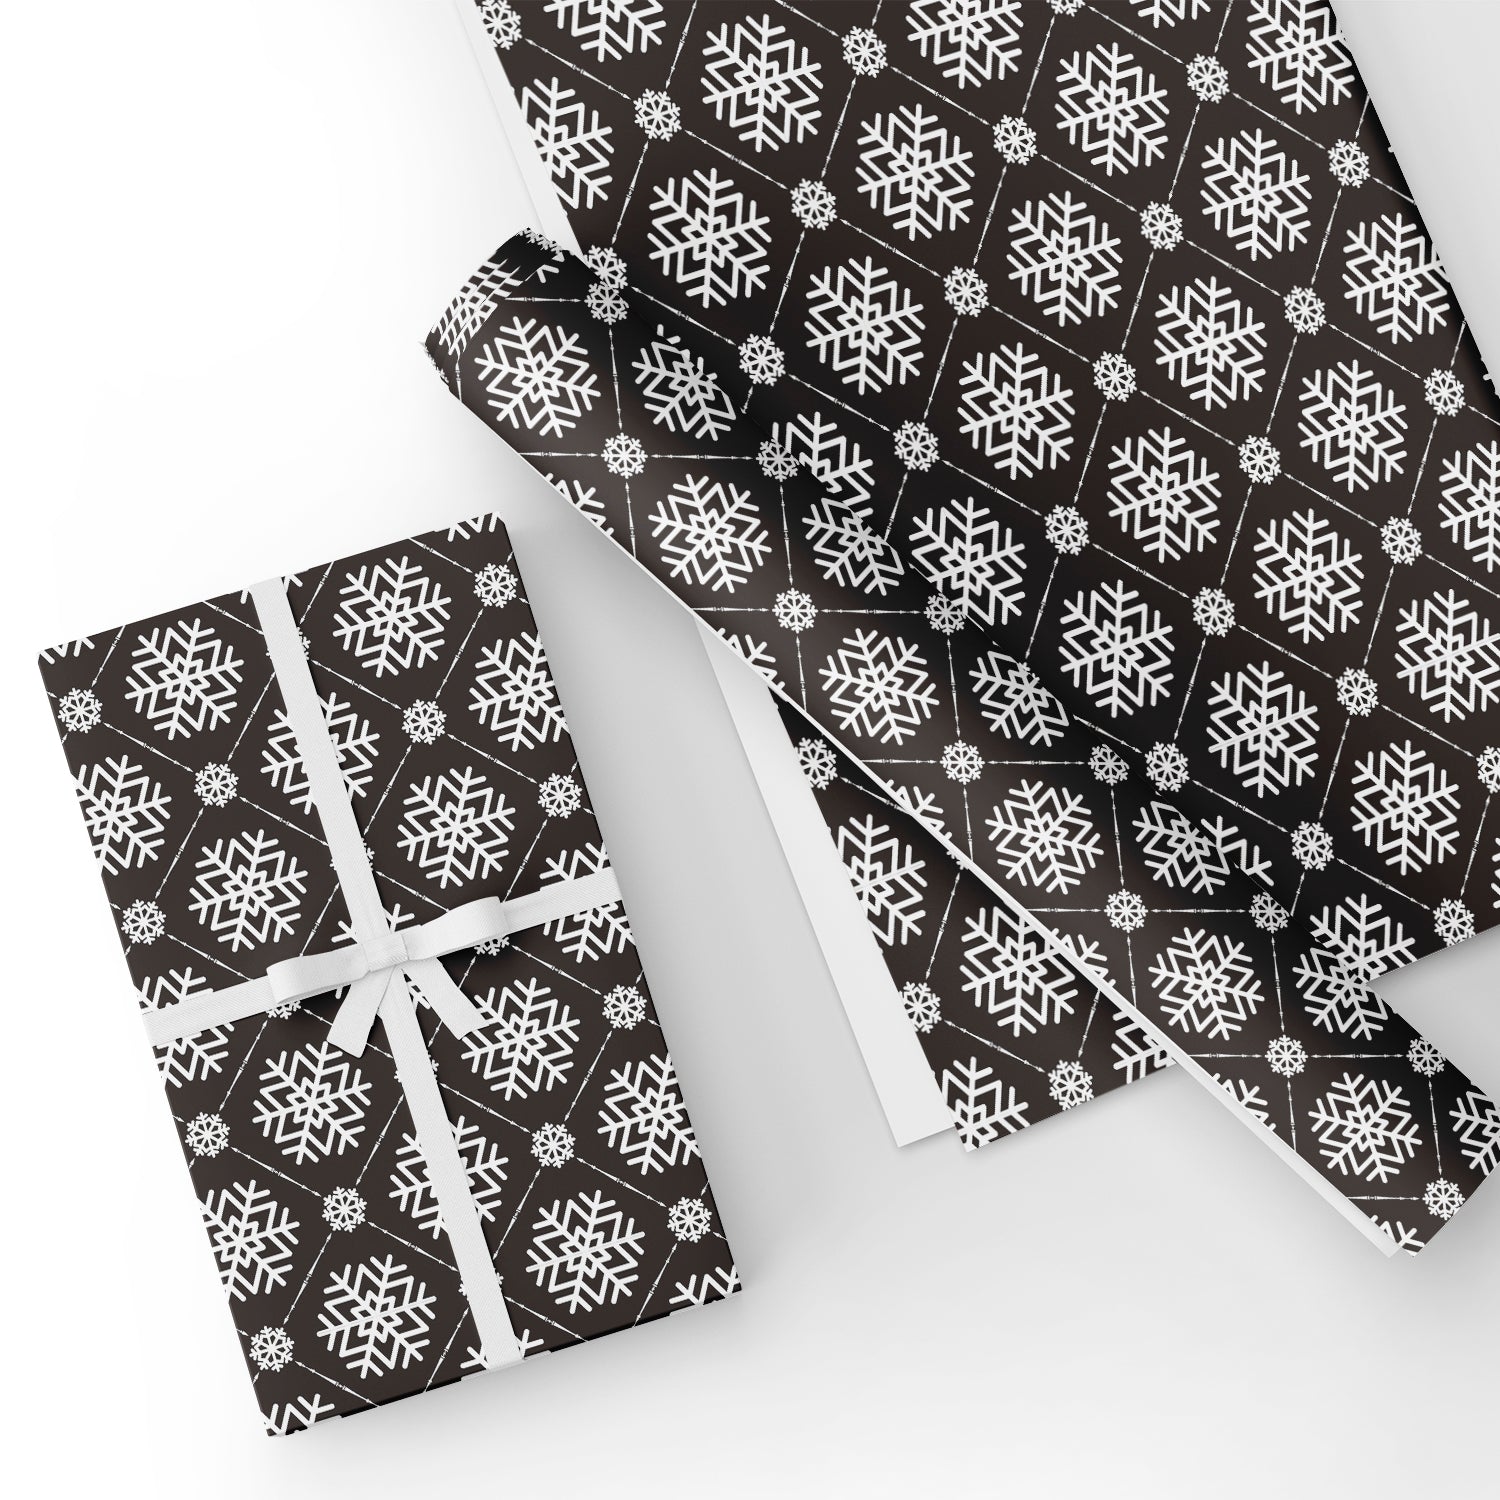 Black and White Snowflake Flat Wrapping Paper Sheet Wholesale Wraphaholic